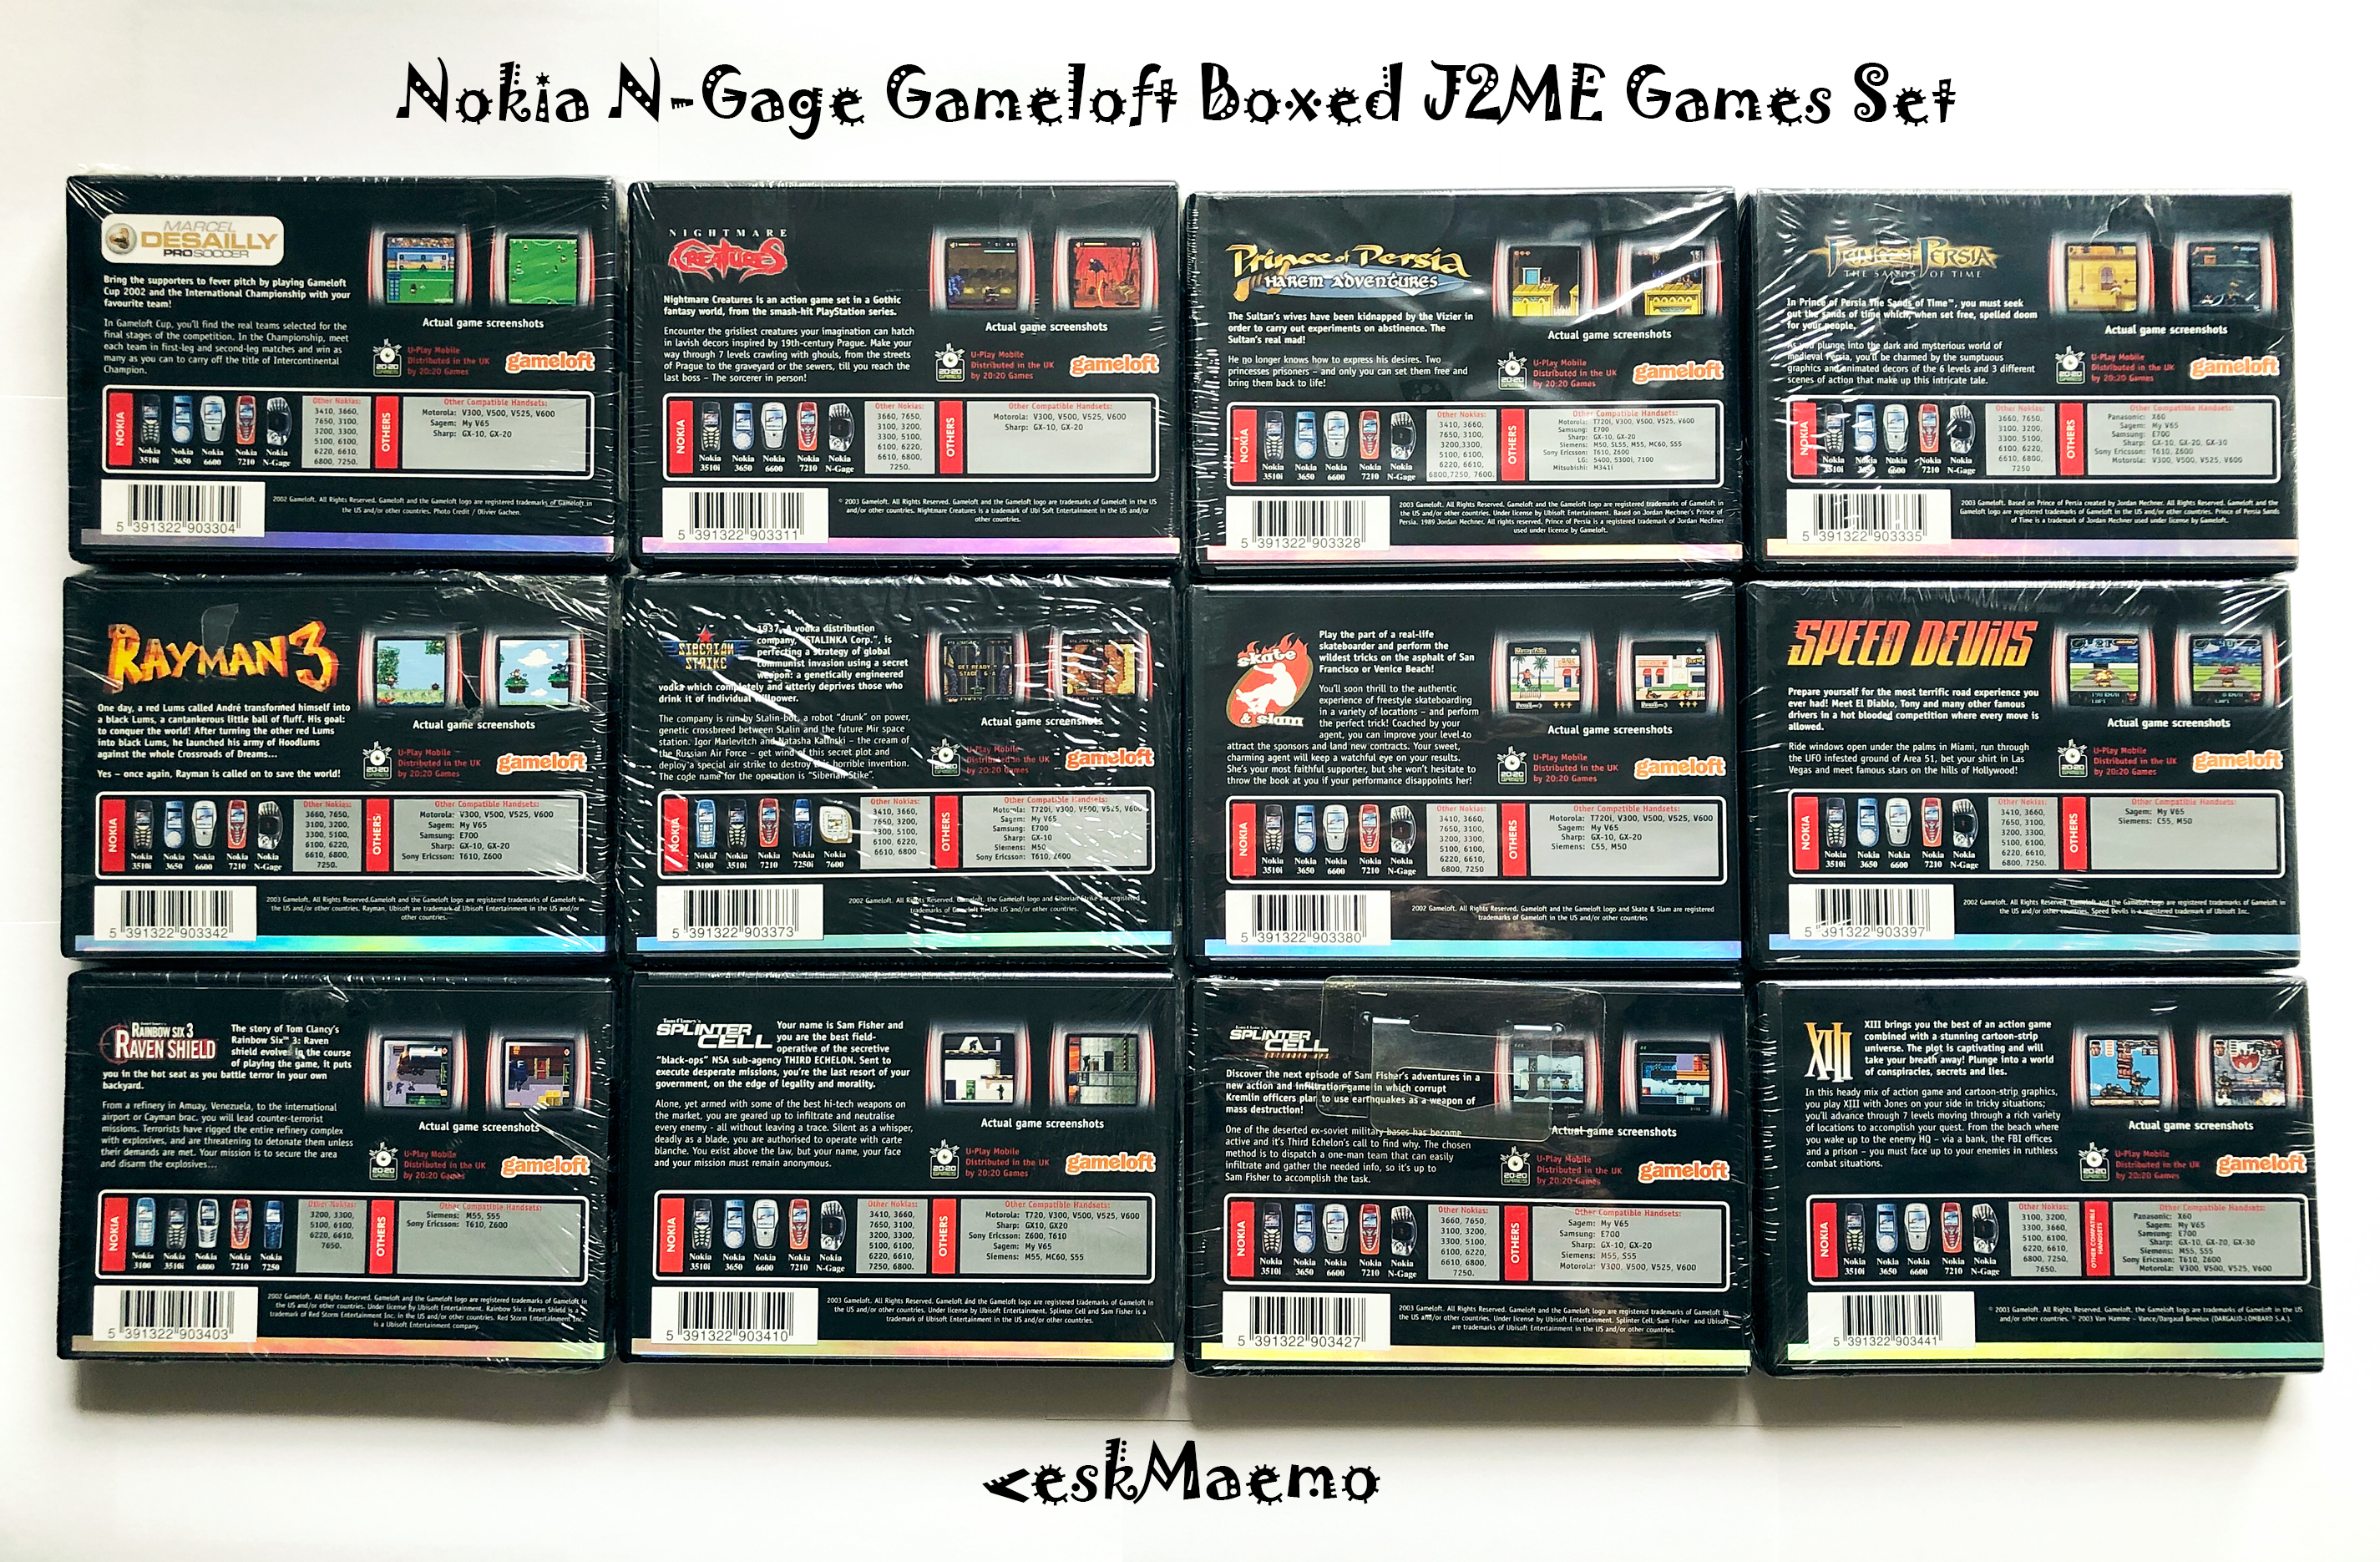 Nokia_N-Gage_Gameloft_Boxed_J2ME_Games_Set_Back-eskMaemo.jpg